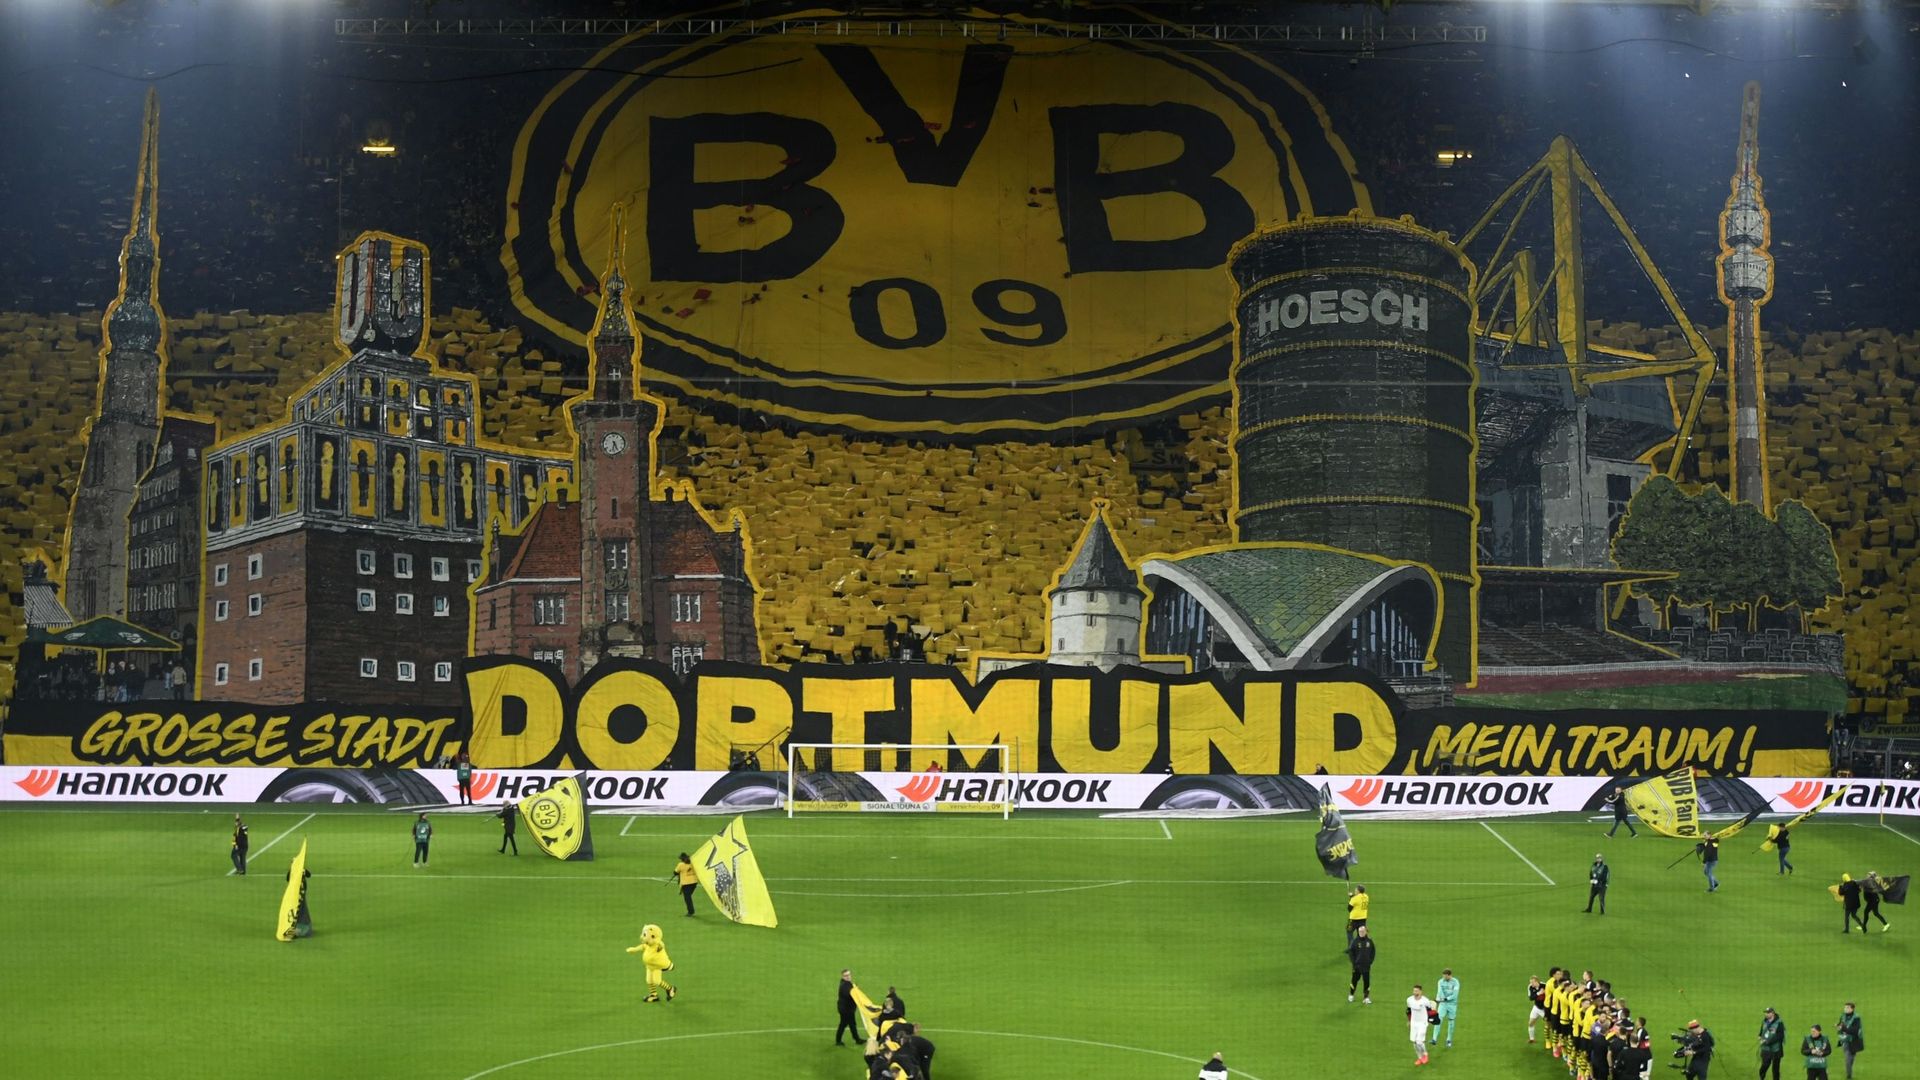 Dortmund s'illustre encore avec un superbe tifo contre Francfort